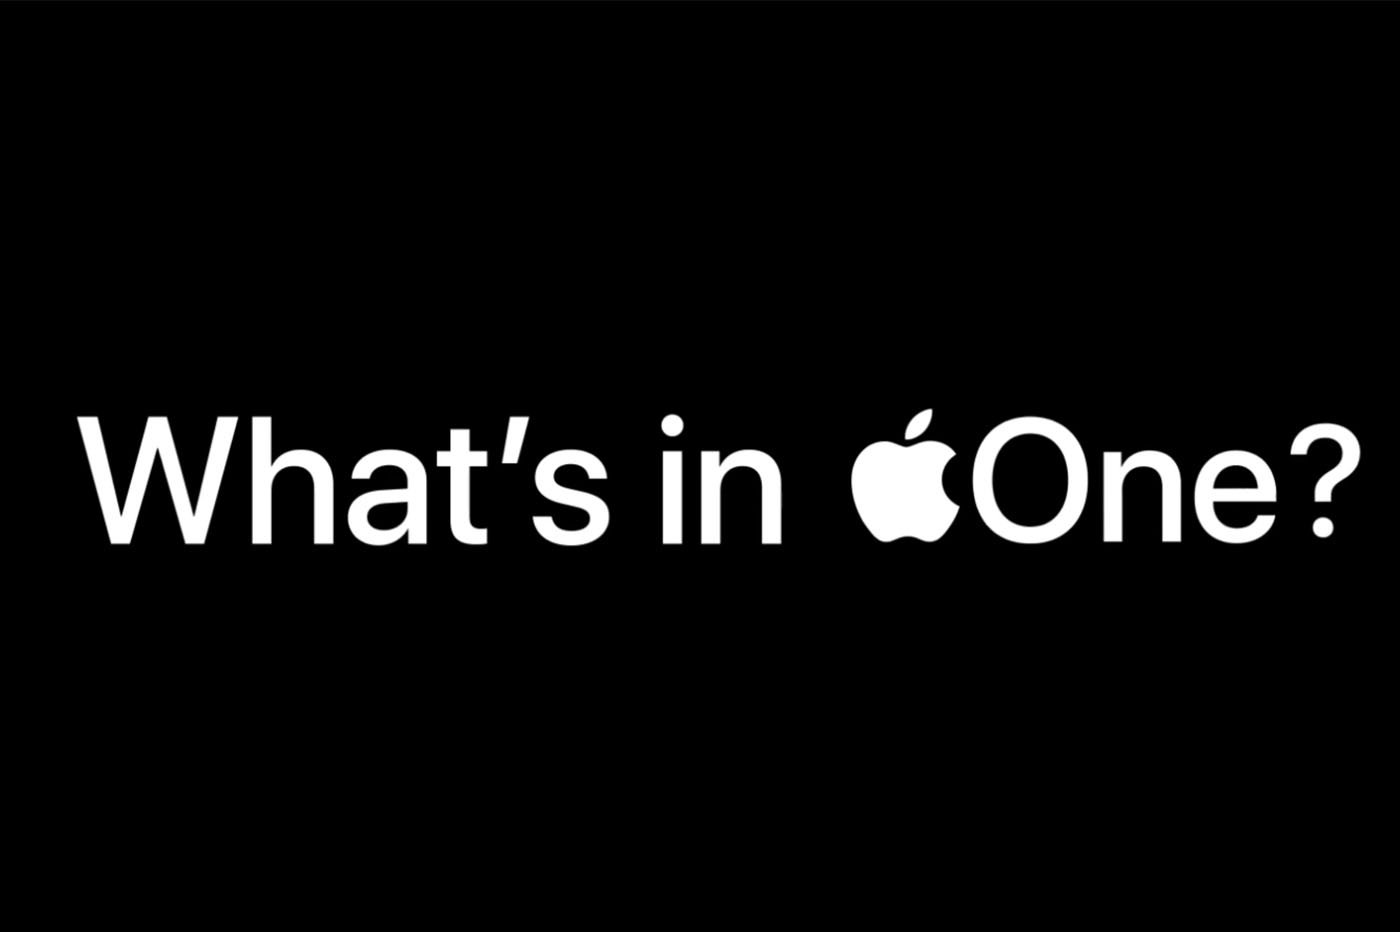 Apple One